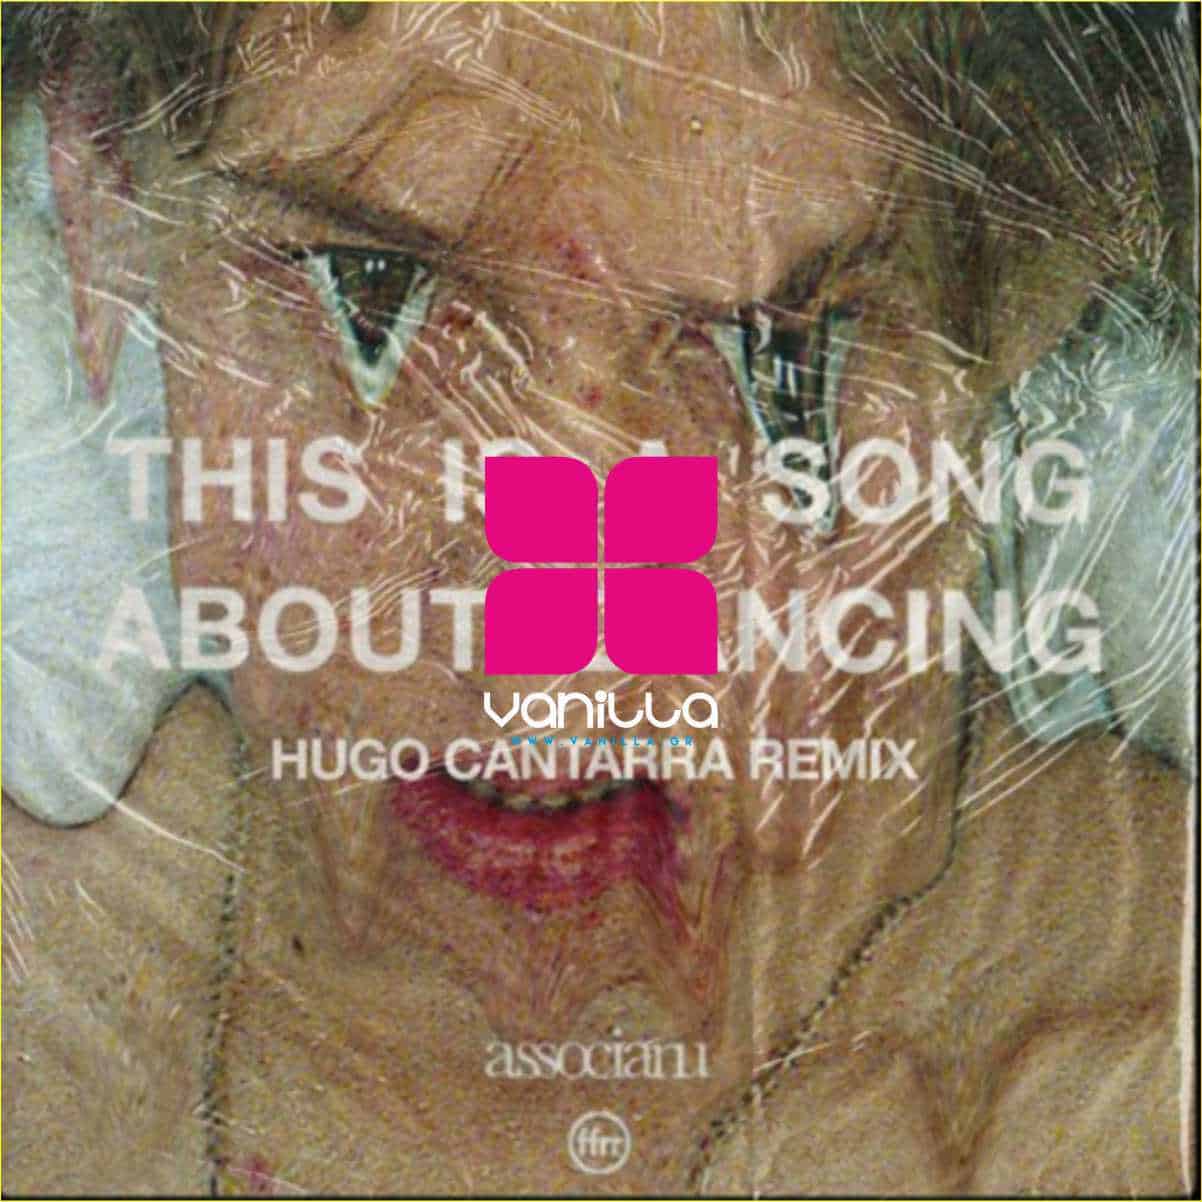 Associanu - This Is A Song About Dancing (Hugo Cantarra Remix)